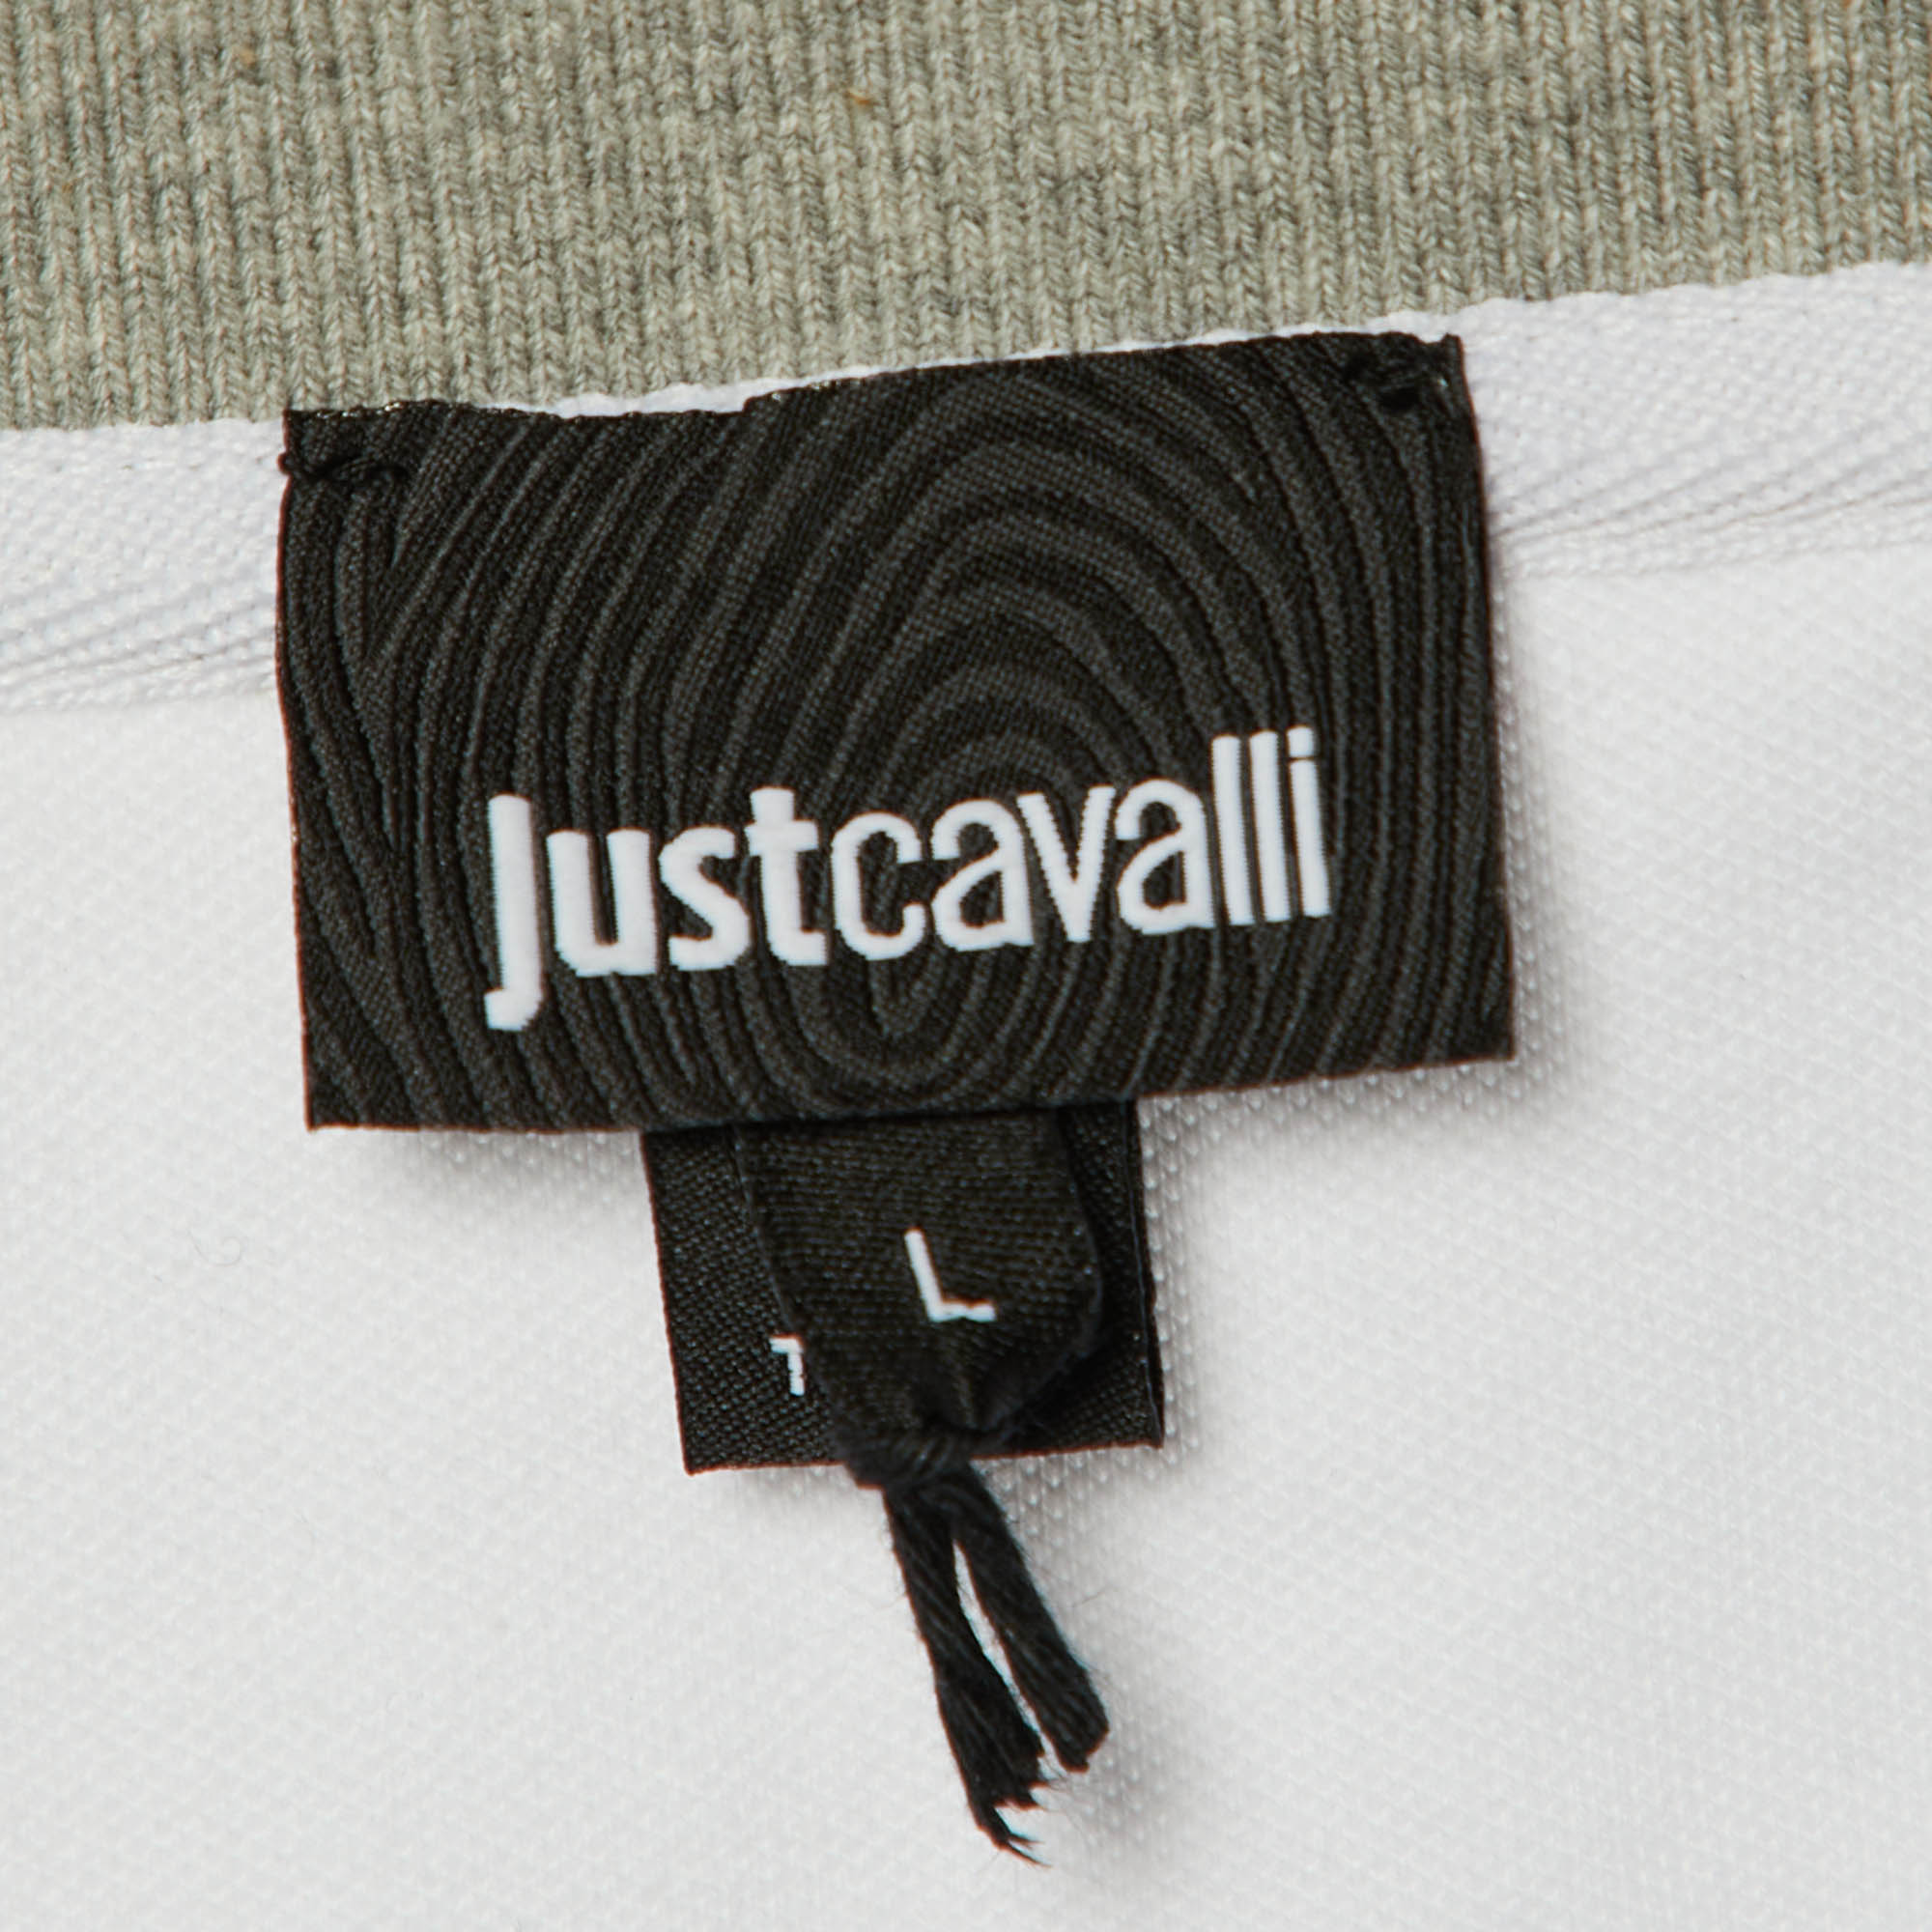 Just Cavalli White Cotton Knit Polo T-Shirt L